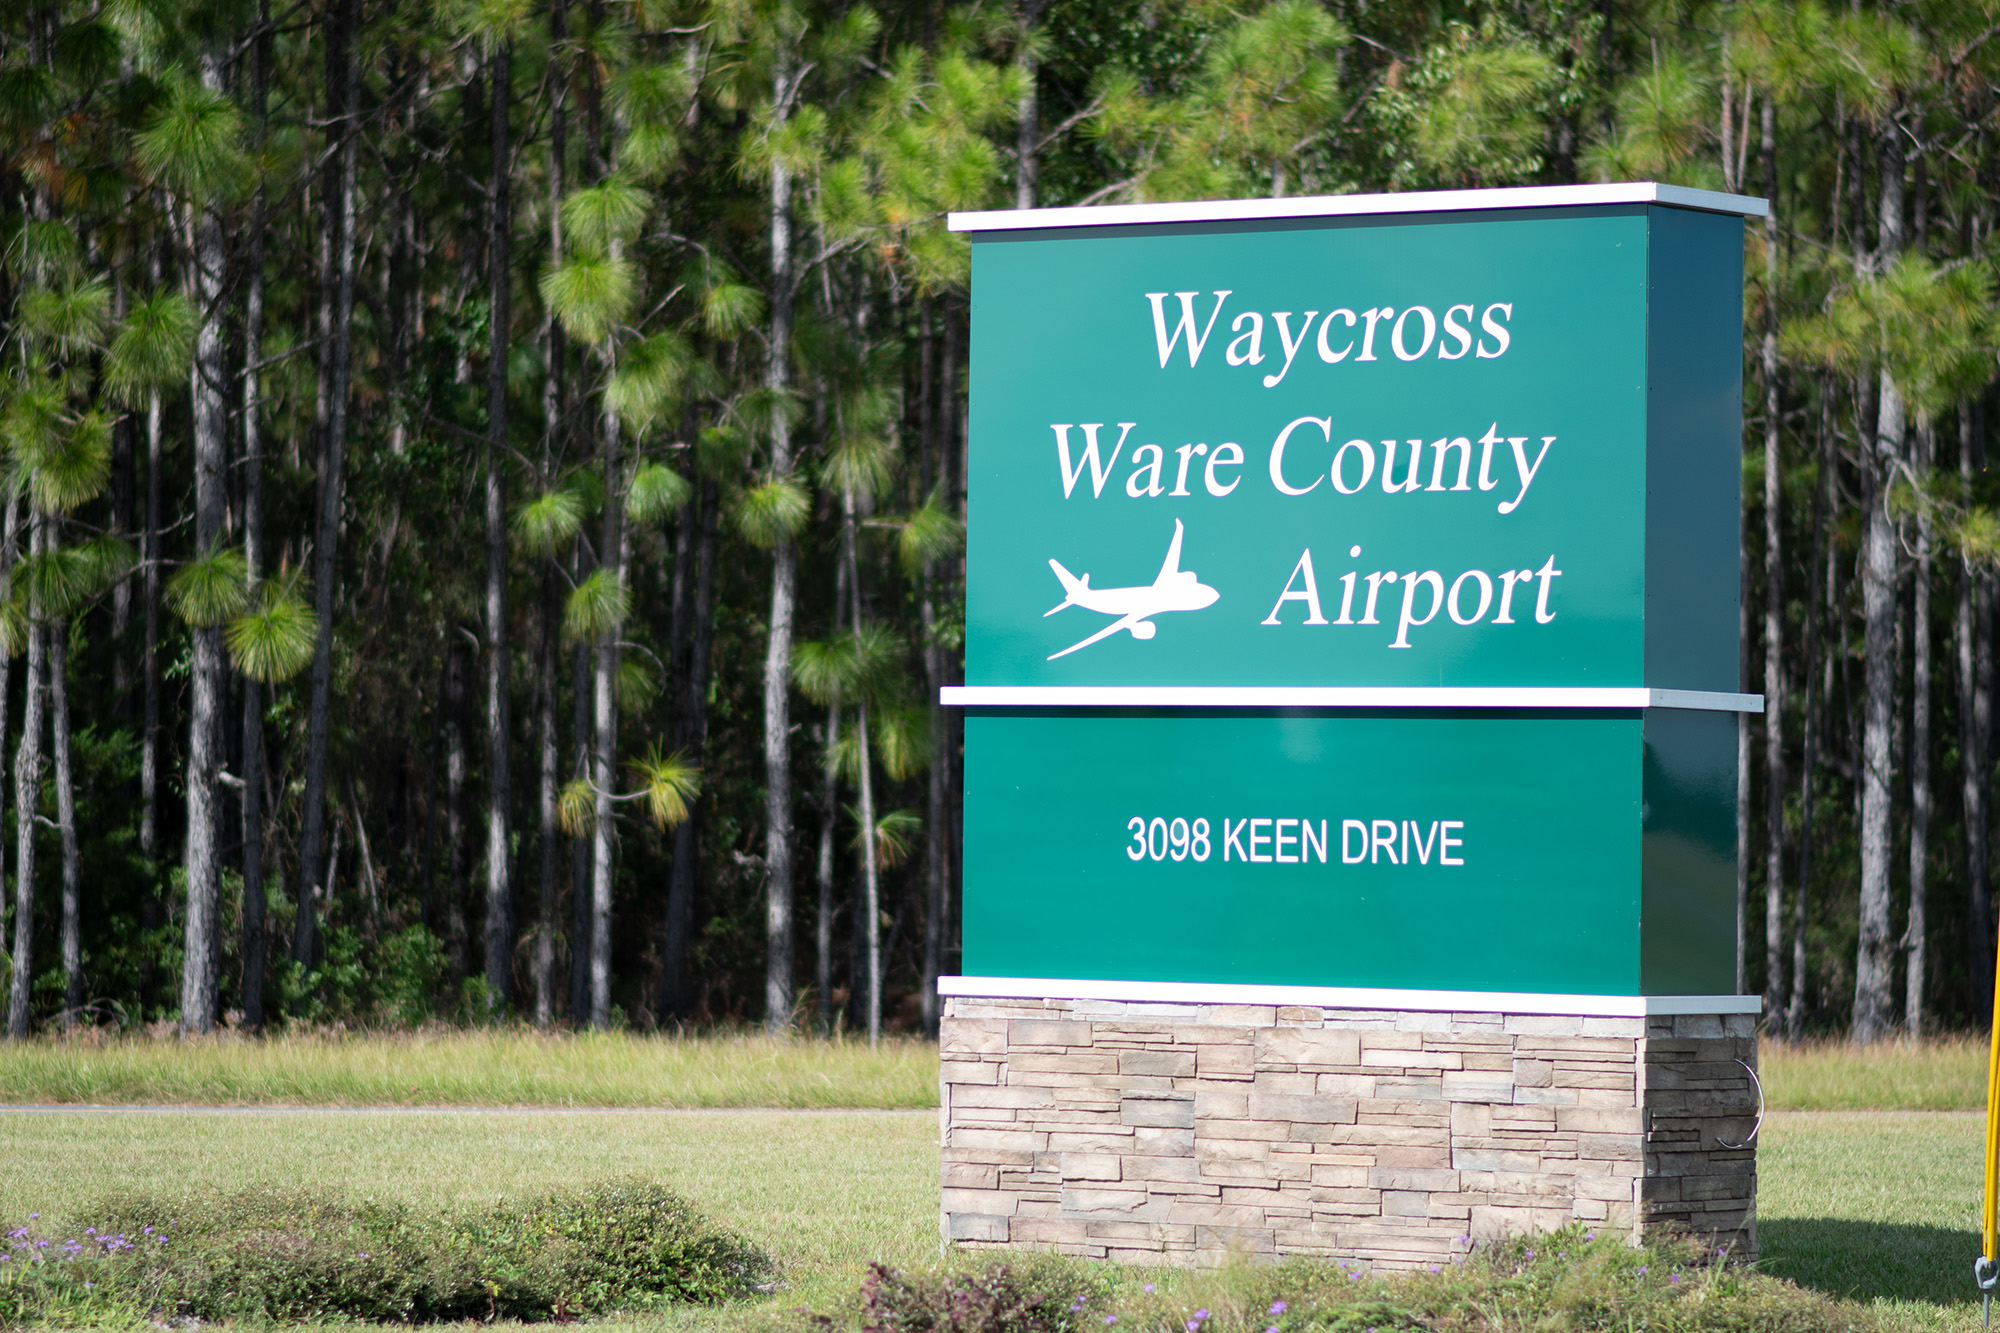 Waycross Ware County Airport sign